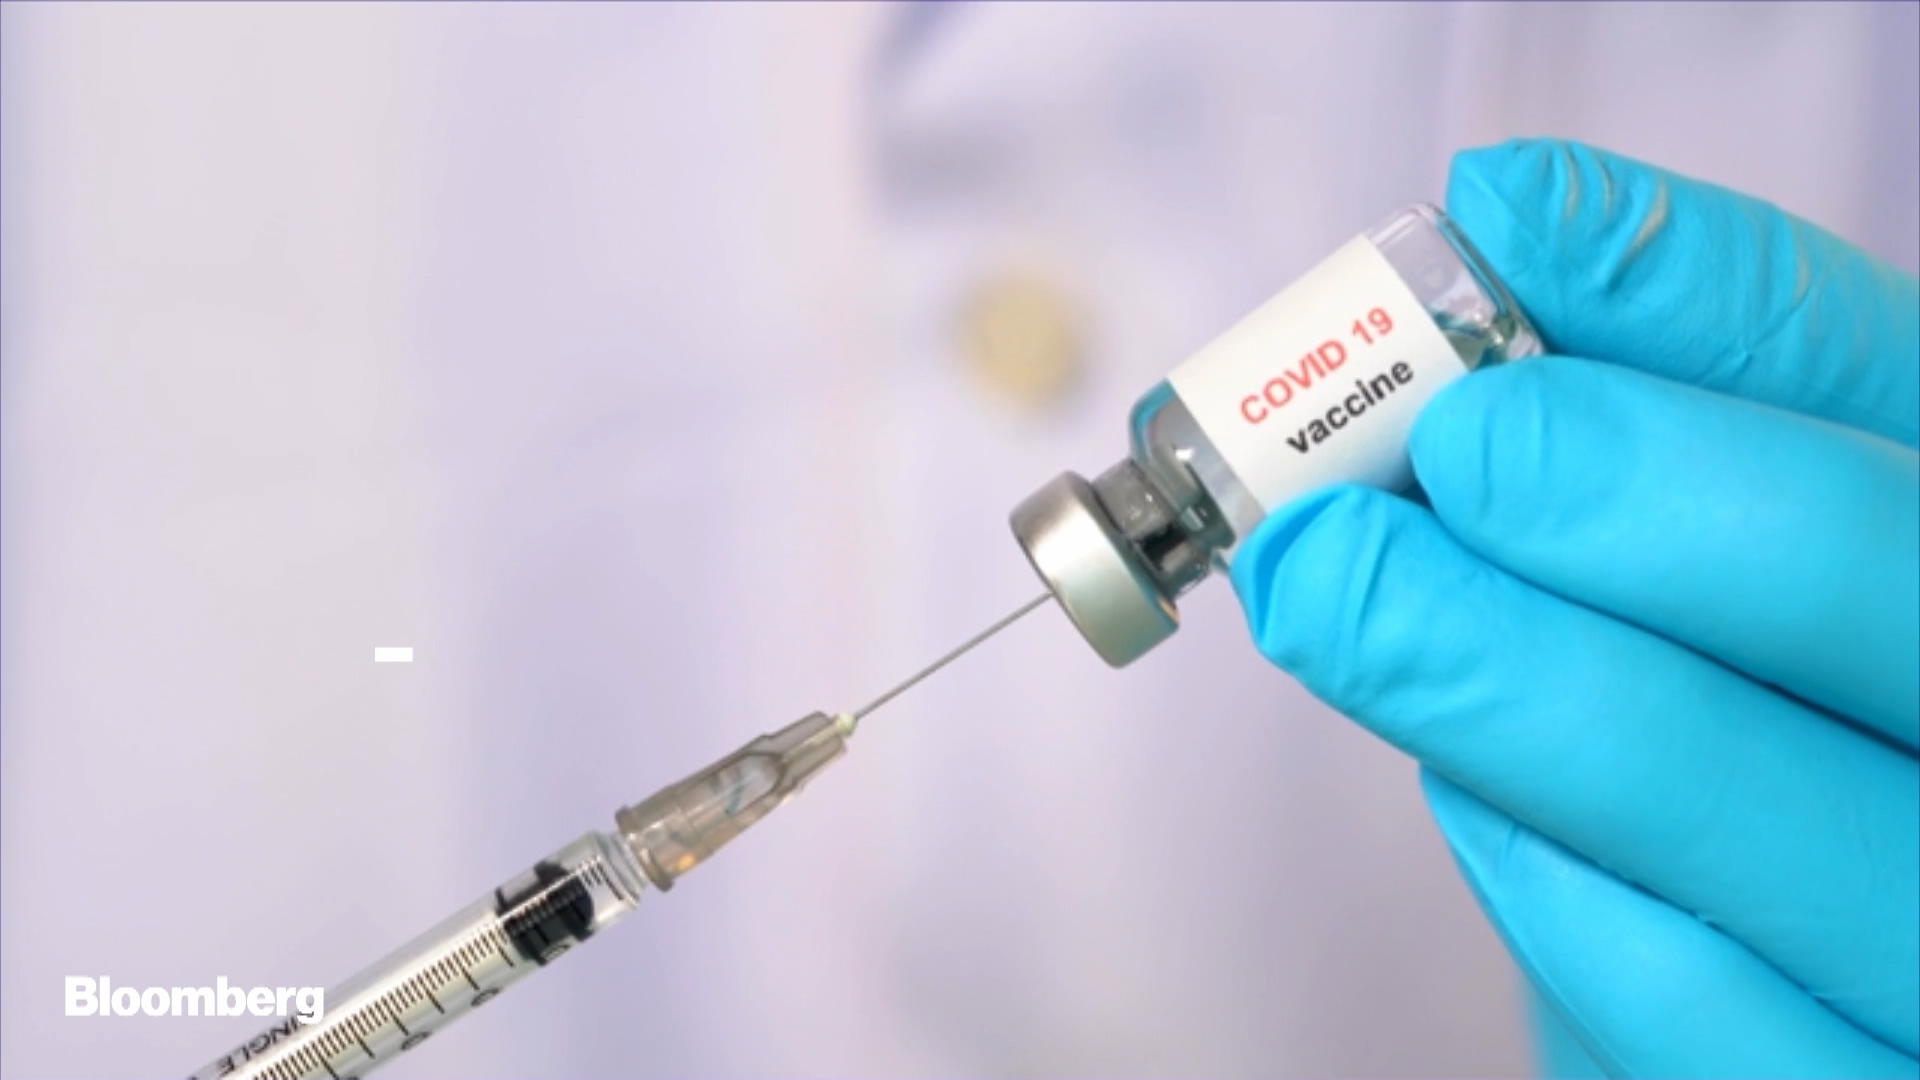 Bloomberg vaccine